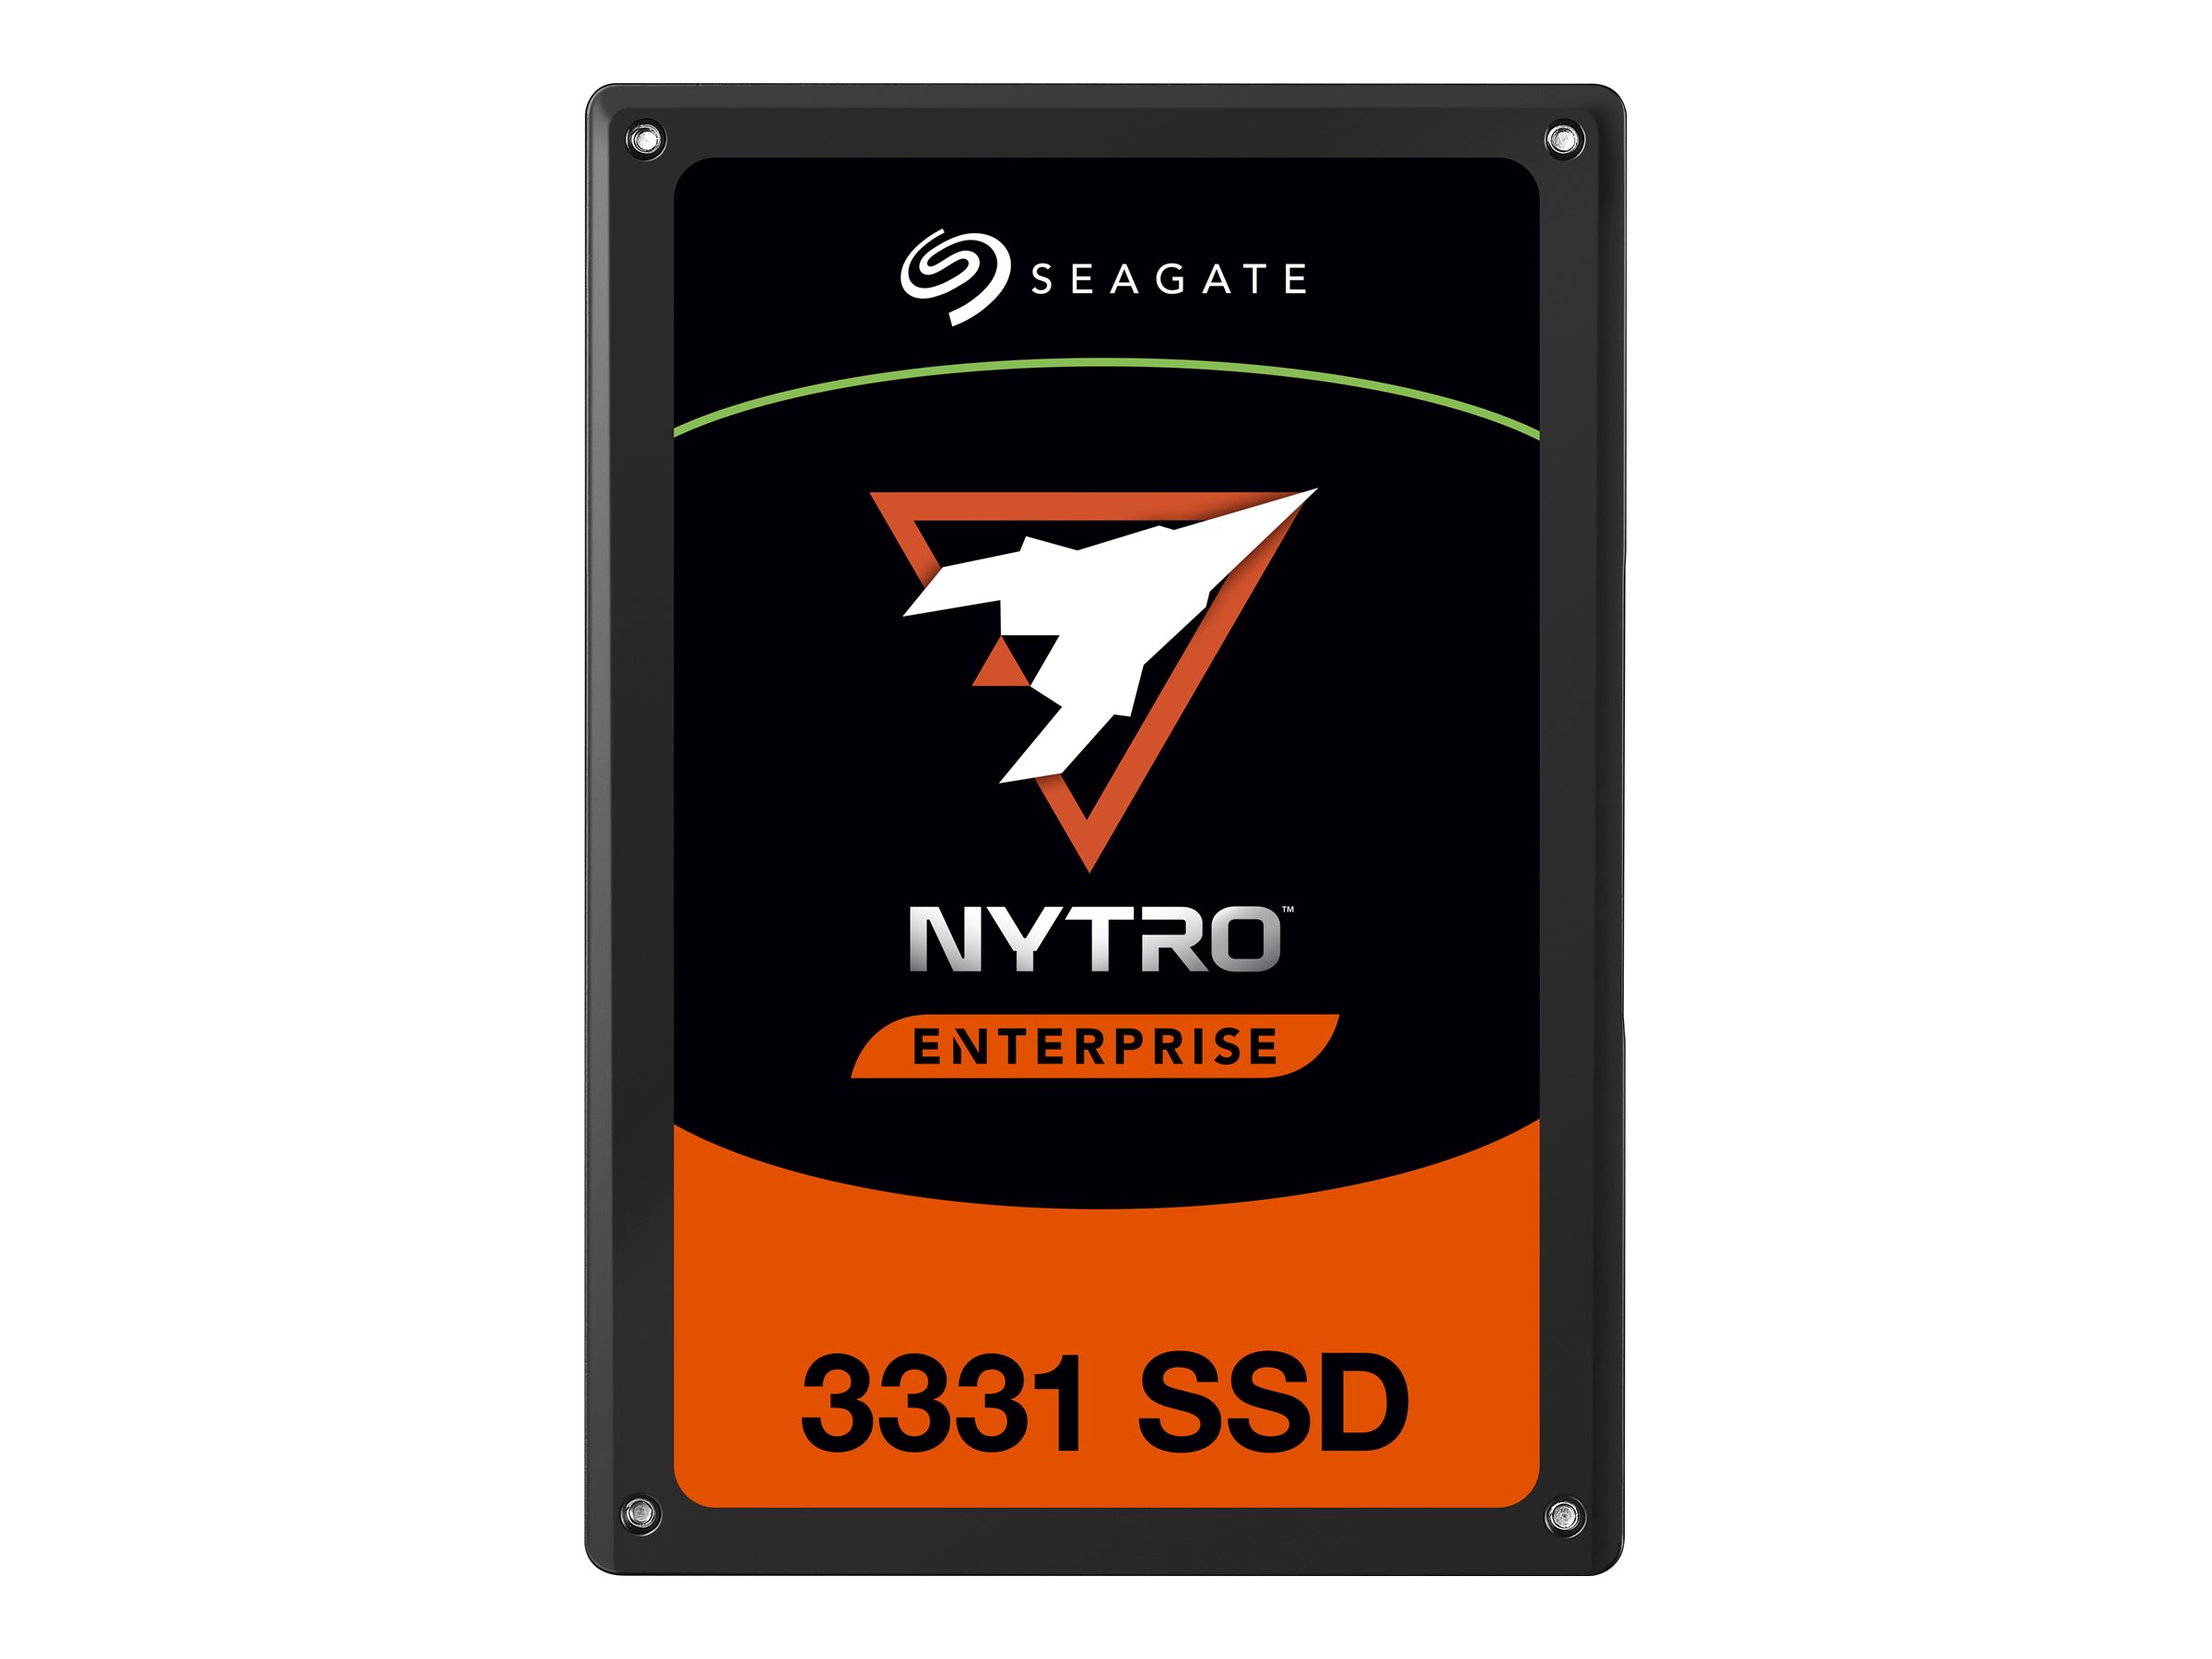 Seagate XS1920SE70004 Nytro 3331 1.92TB 2.5'' SAS SSD - image 2 of 3